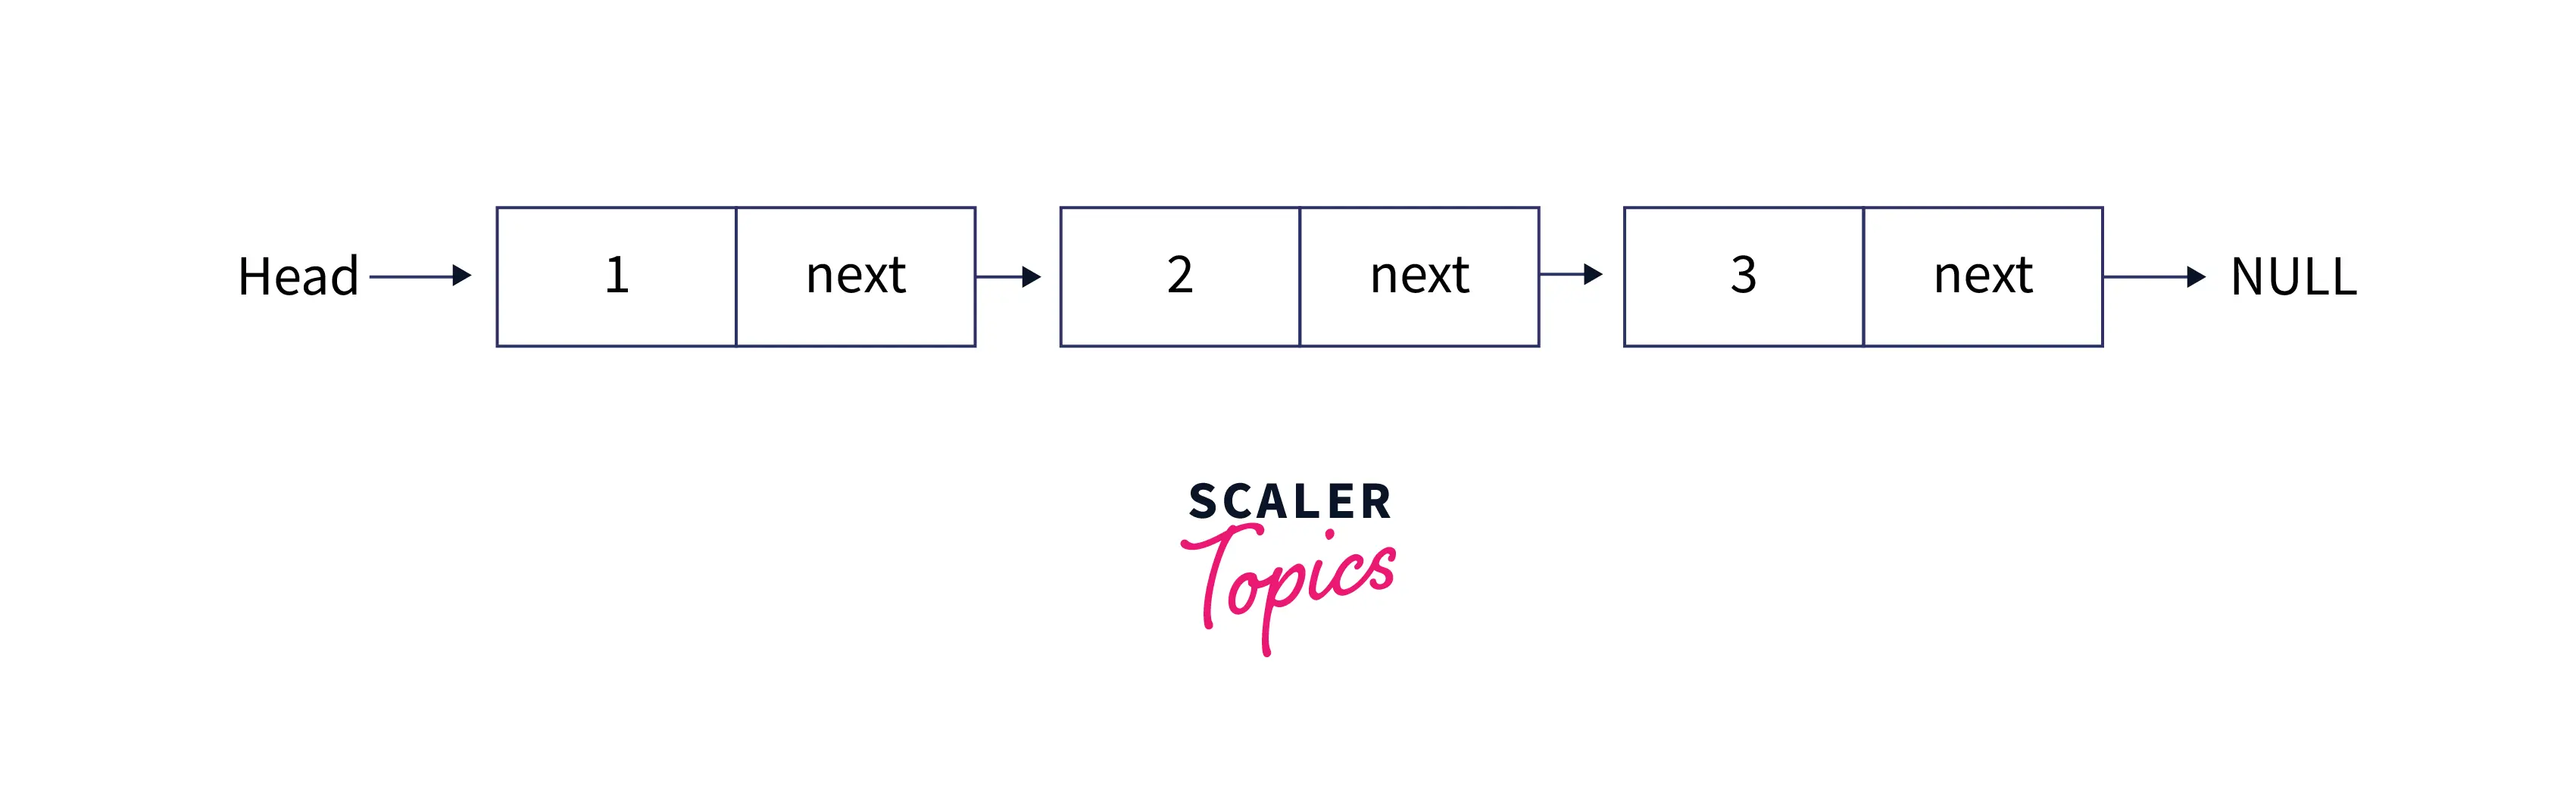 example-linked-list-having-three-nodes